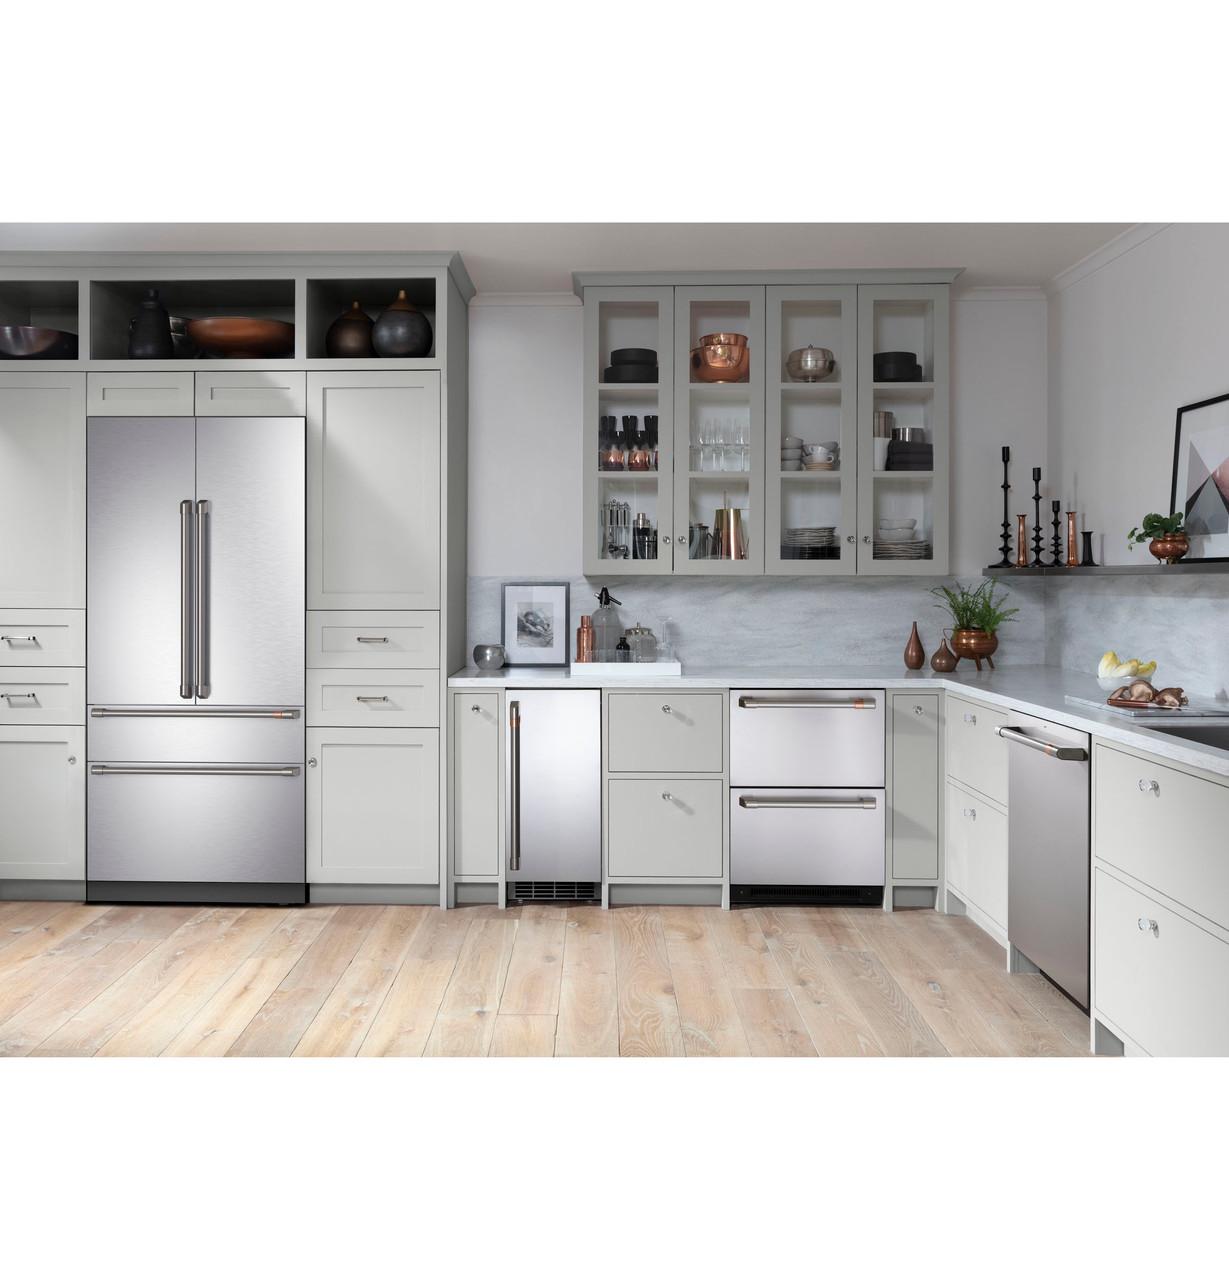 Cafe CIP36NP2VS1 Café&#8482; 36" Integrated French-Door Refrigerator